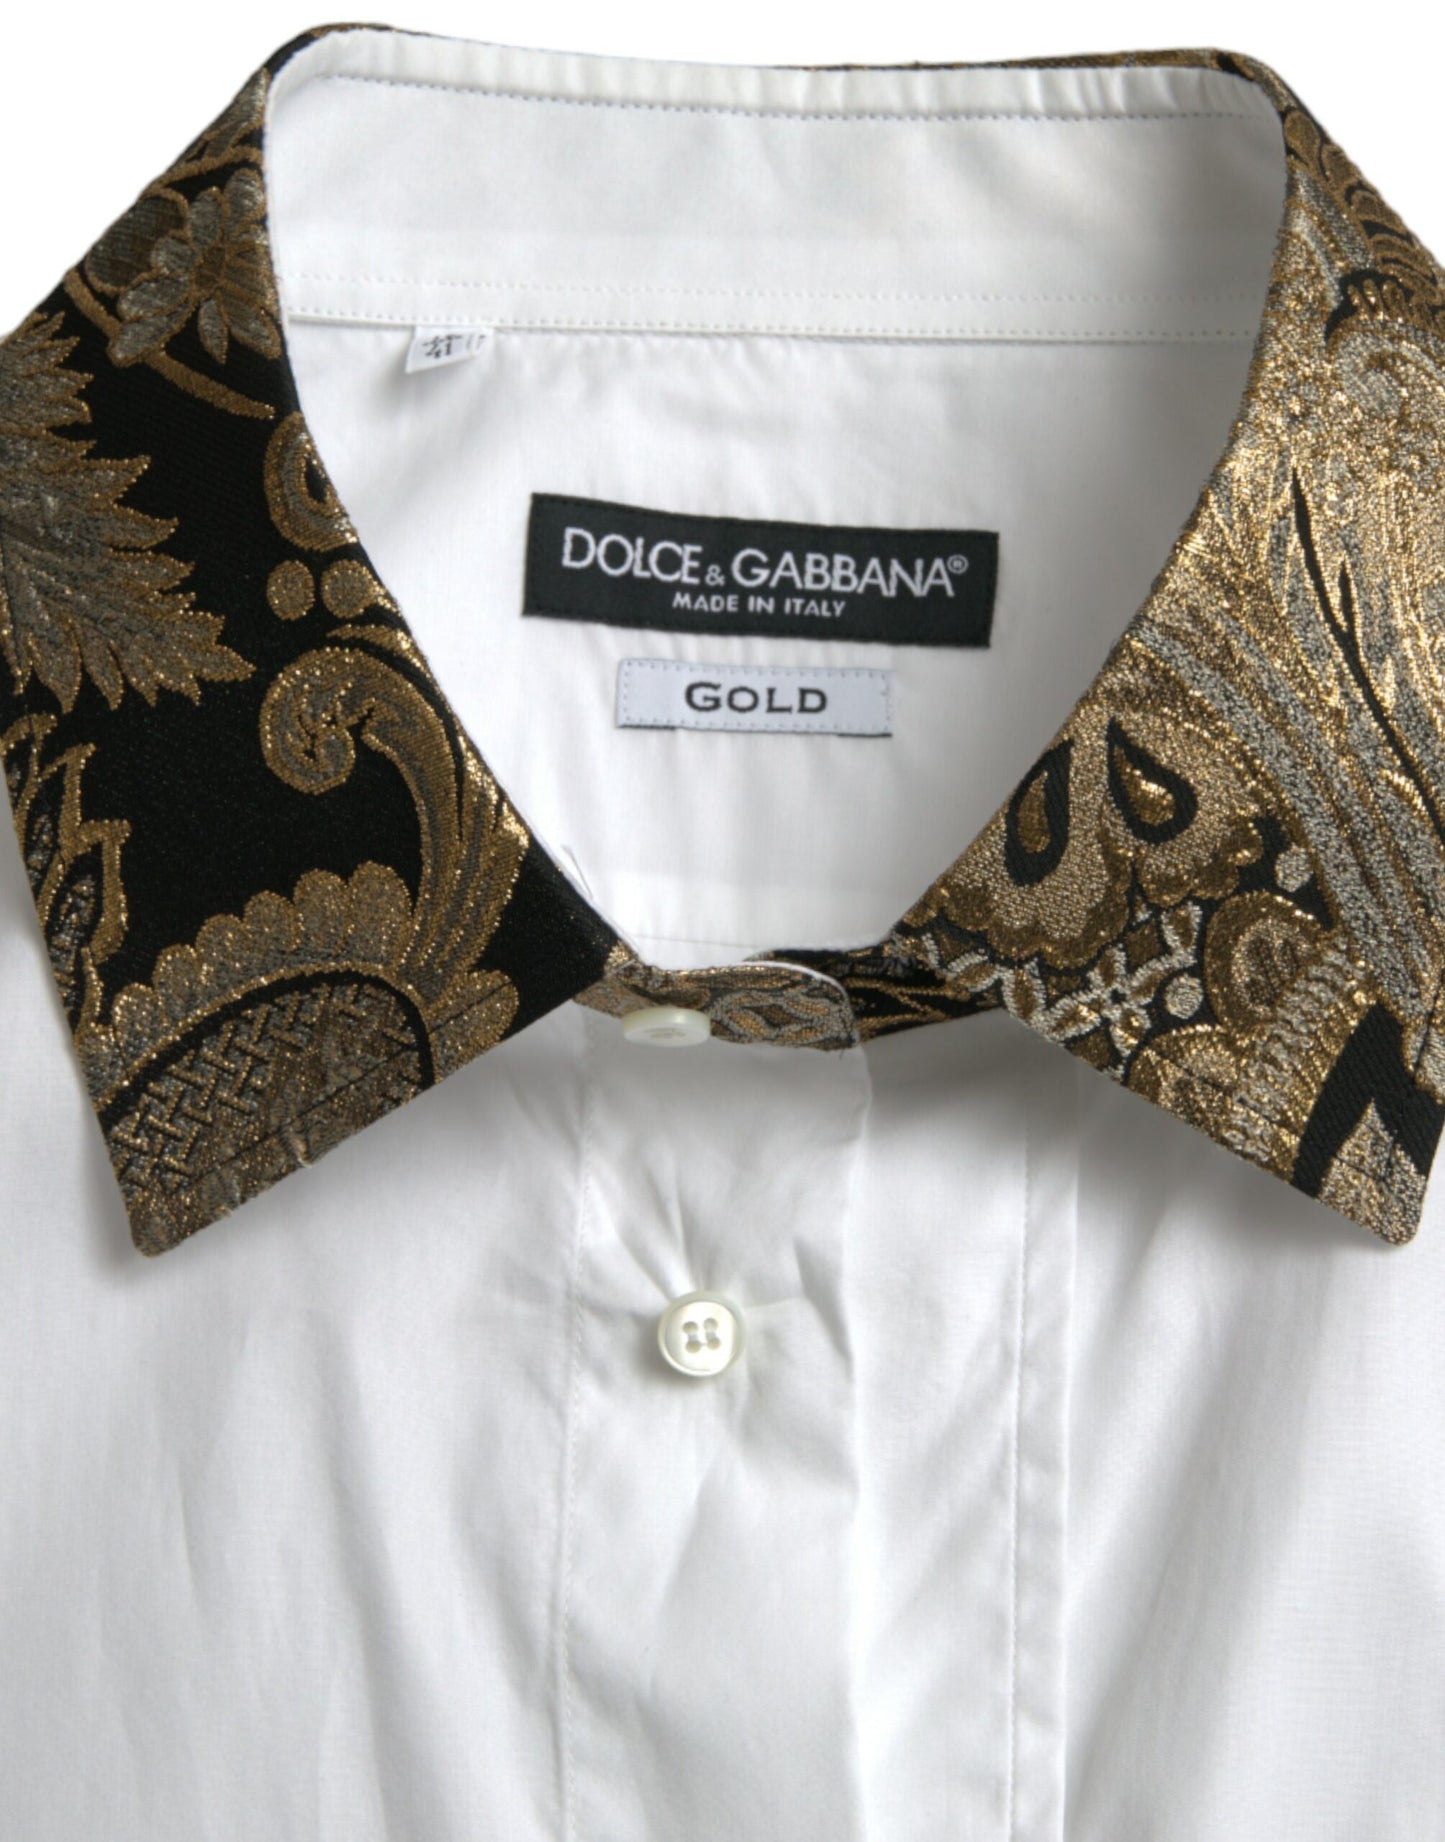 Elegant Gold Detail Dress Shirt